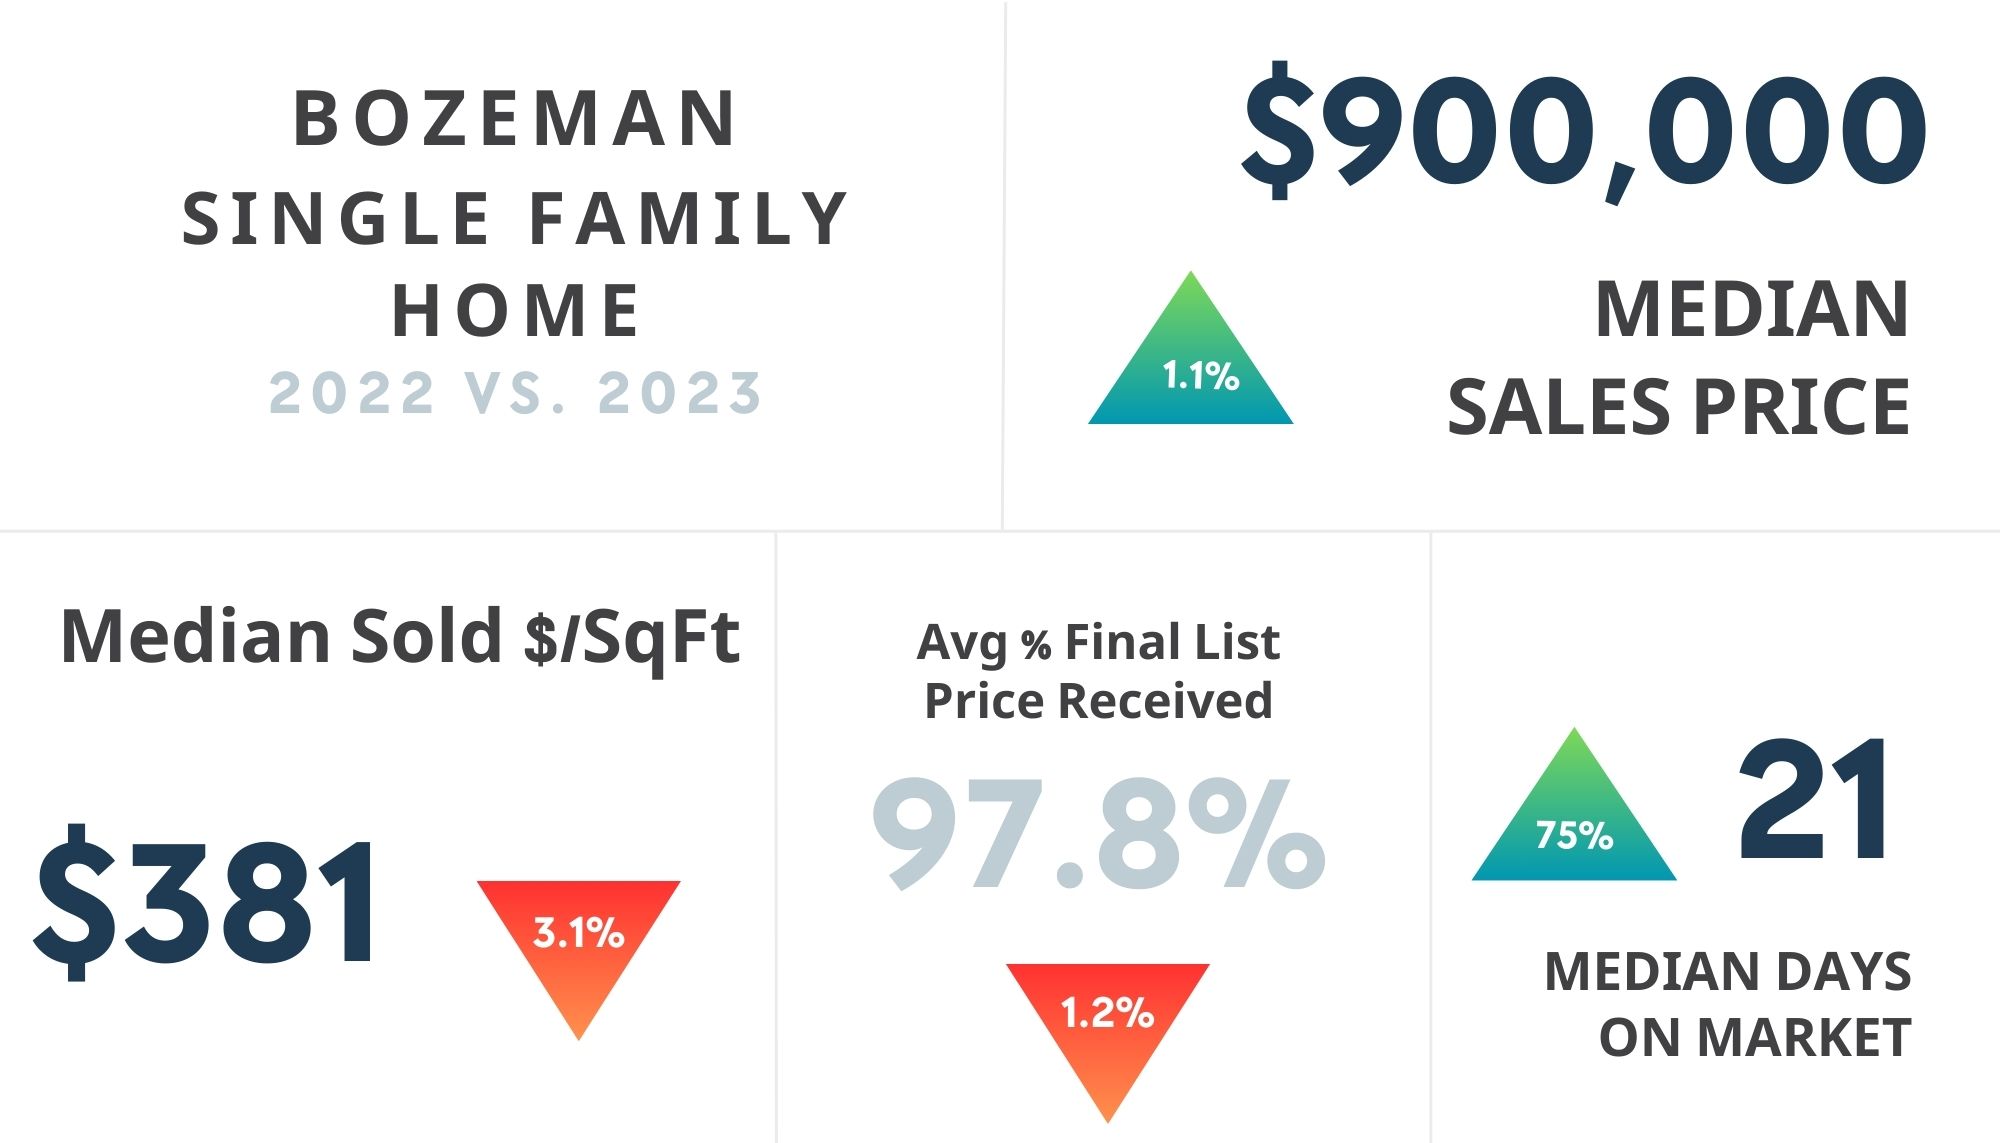 Bozeman single family home 2023